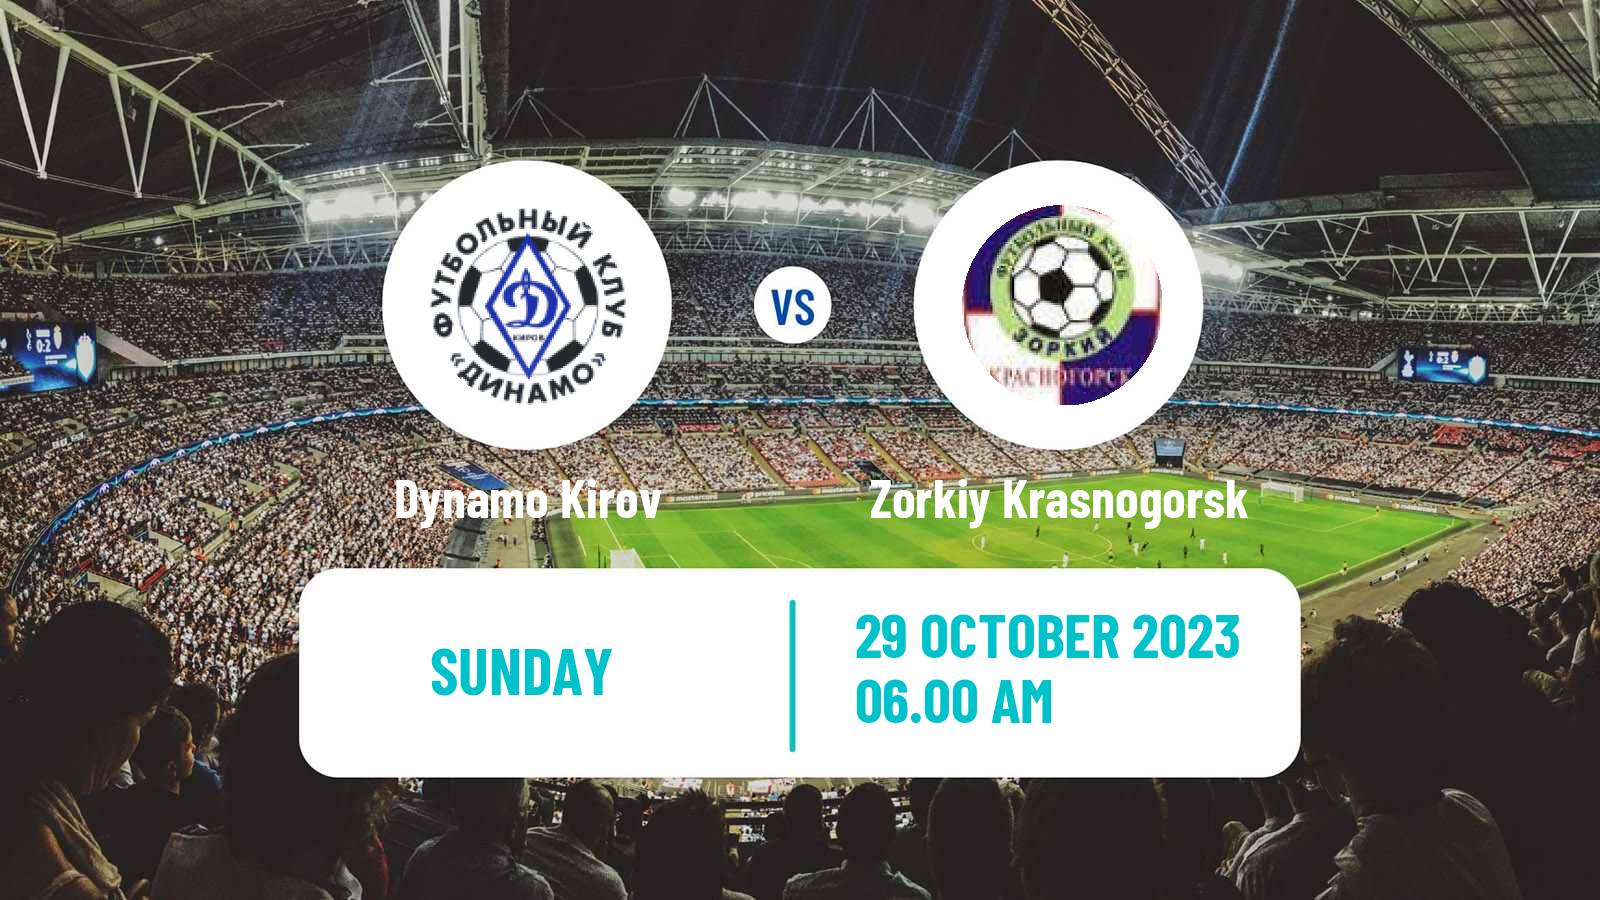 Soccer FNL 2 Division B Group 2 Dynamo Kirov - Zorkiy Krasnogorsk